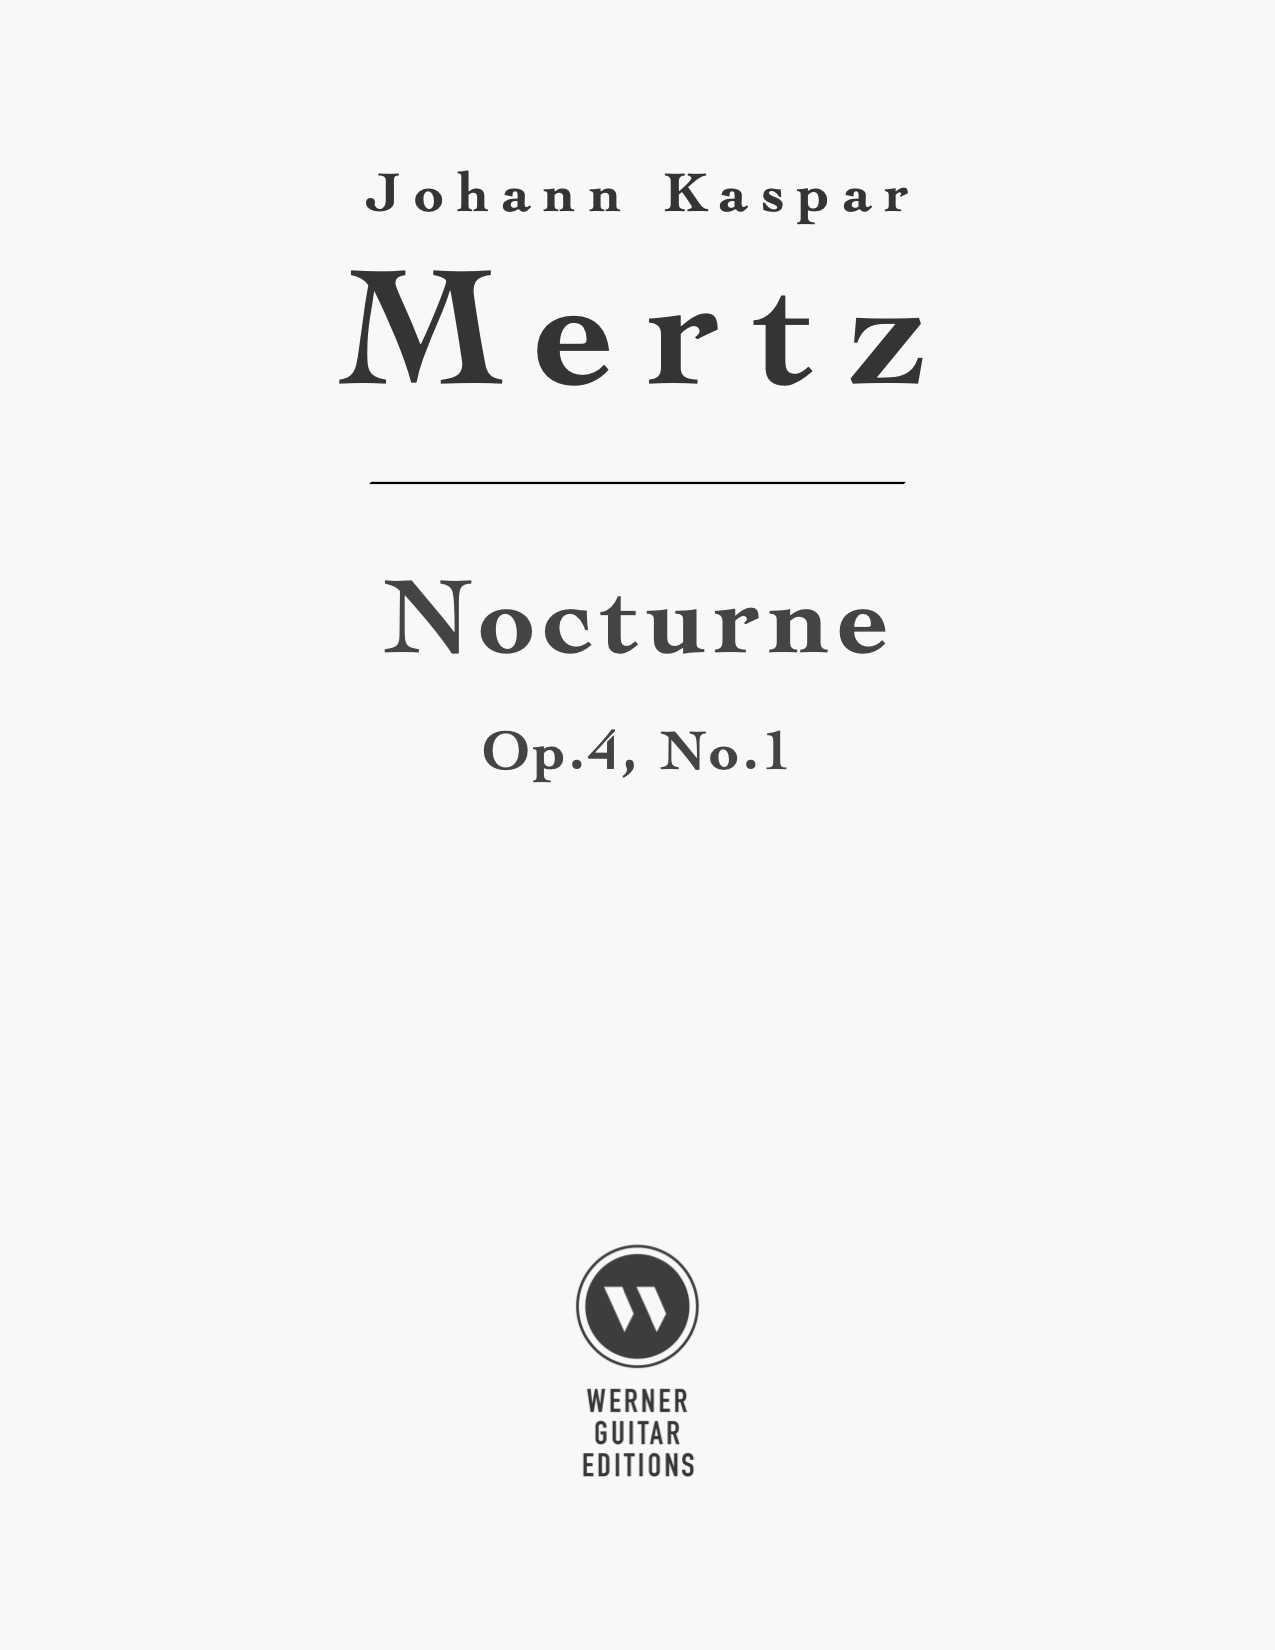 Nocturne No.1, Op.4  by Mertz (PDF Sheet Music or Tab)